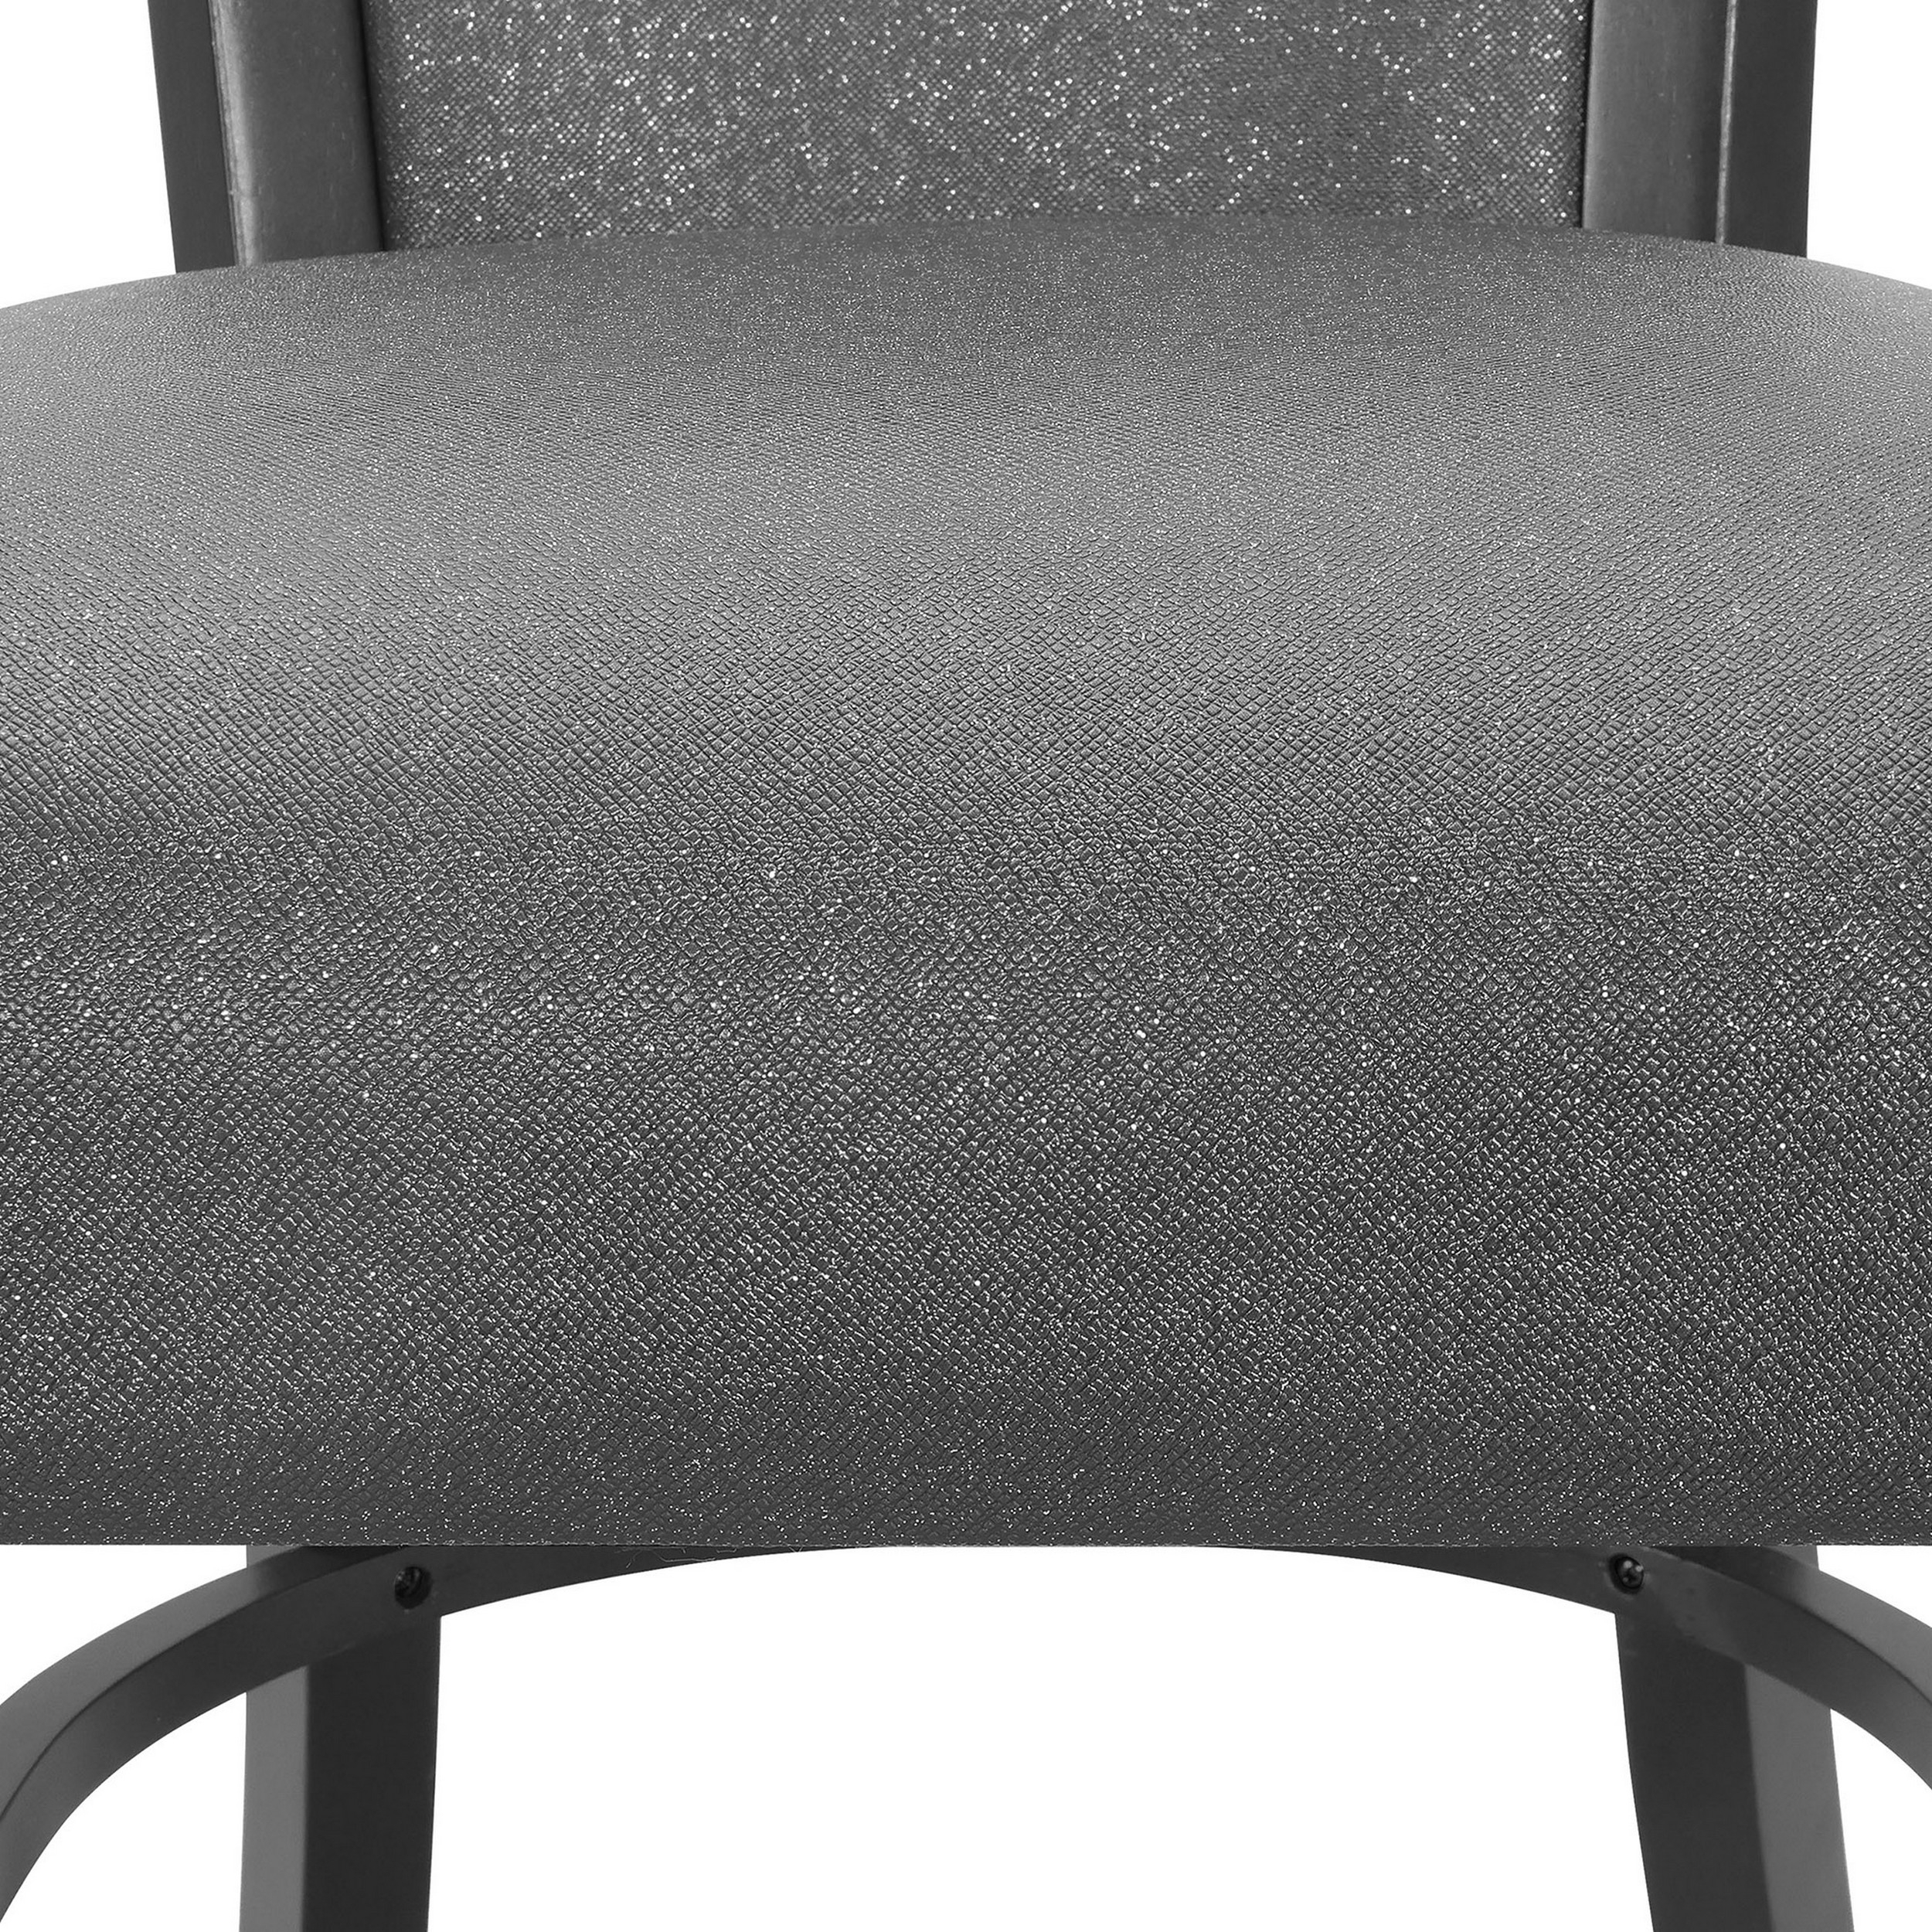 Brandon 24 Inch Counter Height Chair Set Of 2, Gray Fabric Upholstery -Saltoro Sherpi